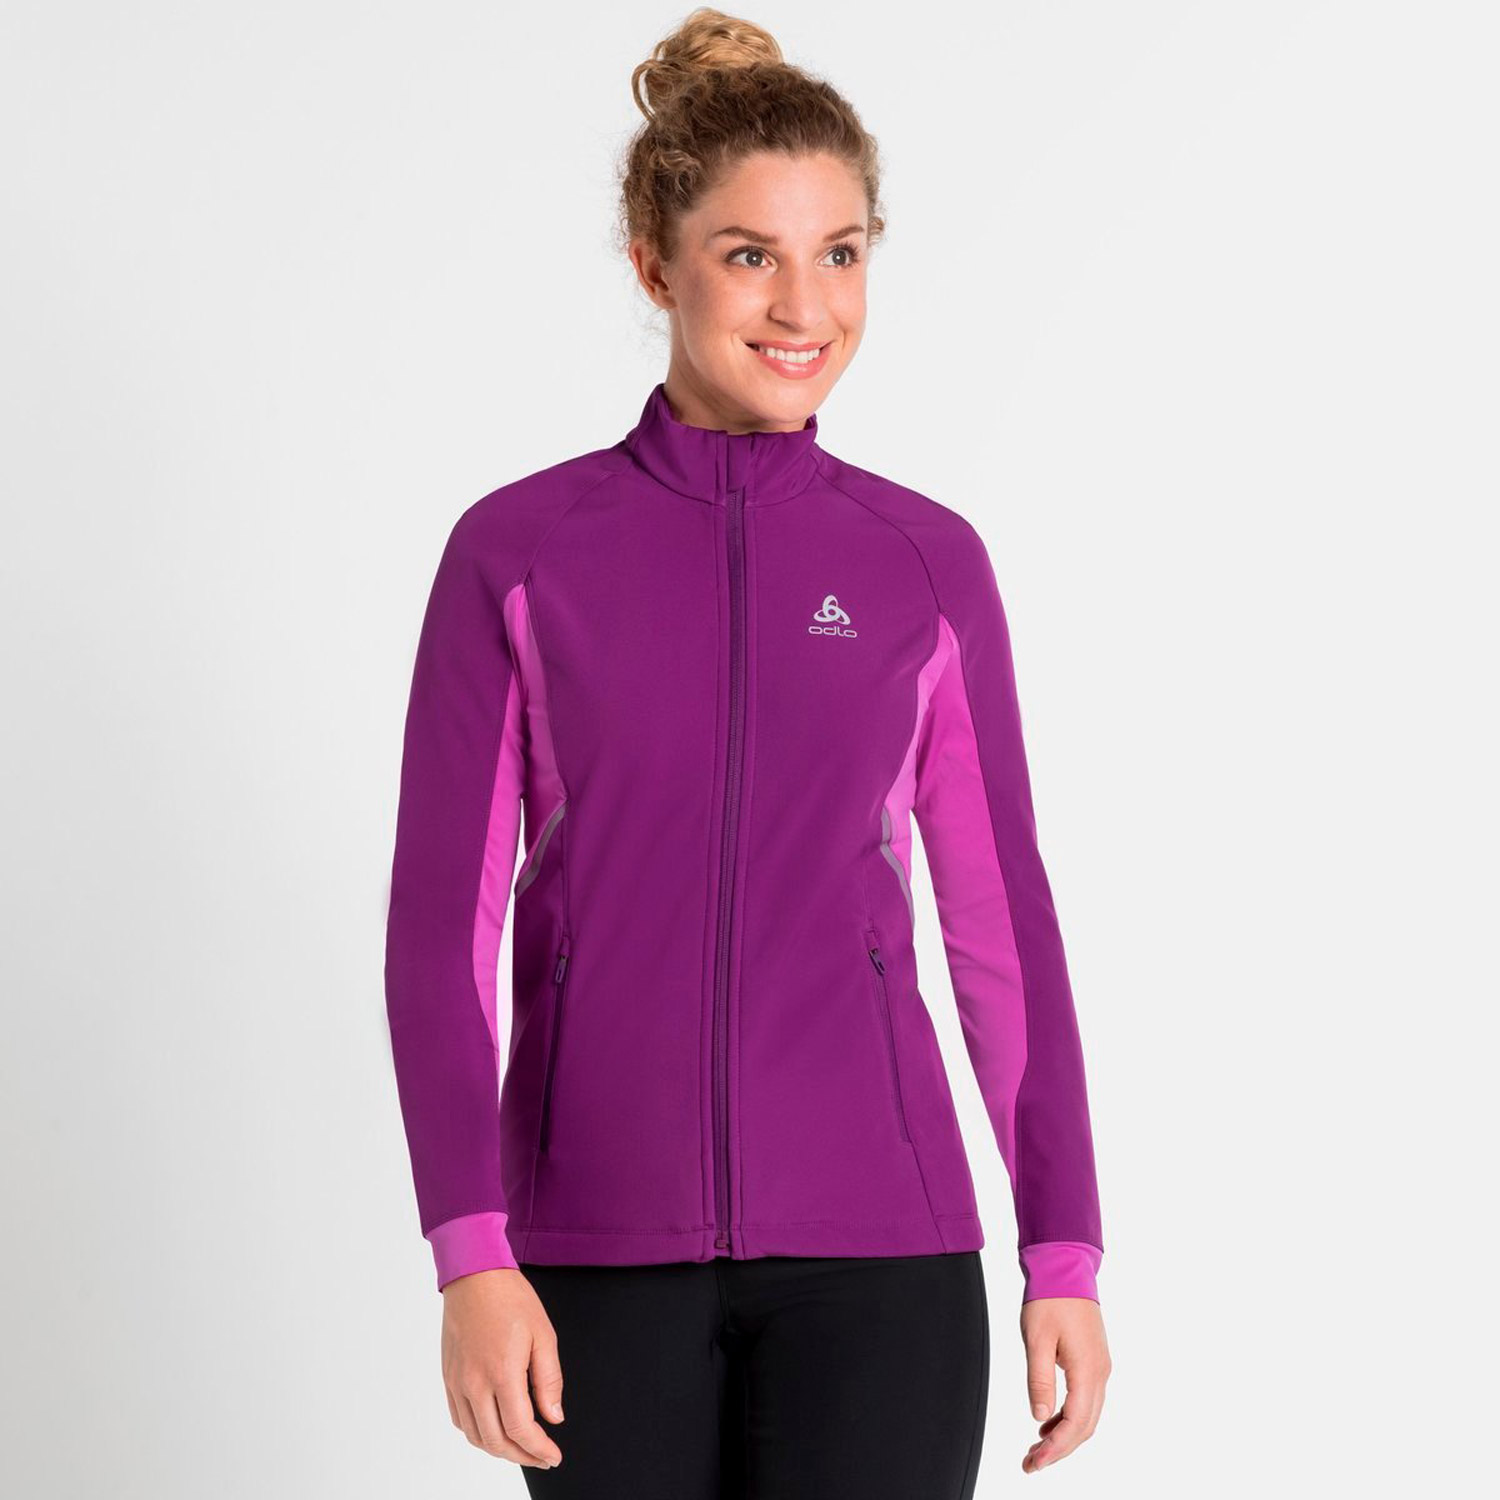 Women’s cross-country skiing jacket